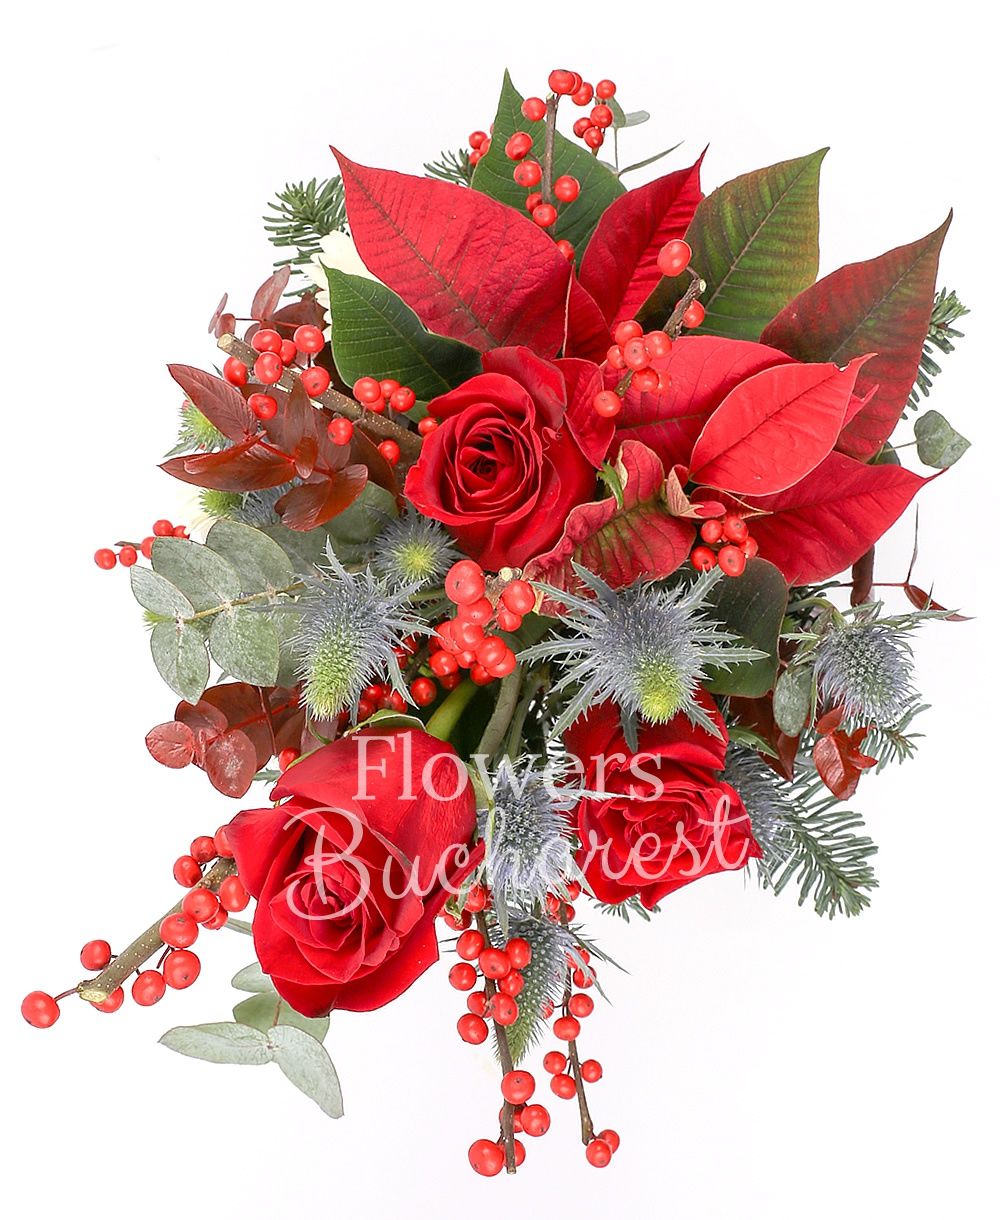 3 red roses, 3 gerbera white, poinsettia, 3 eryngium, ilex, fir, greenery